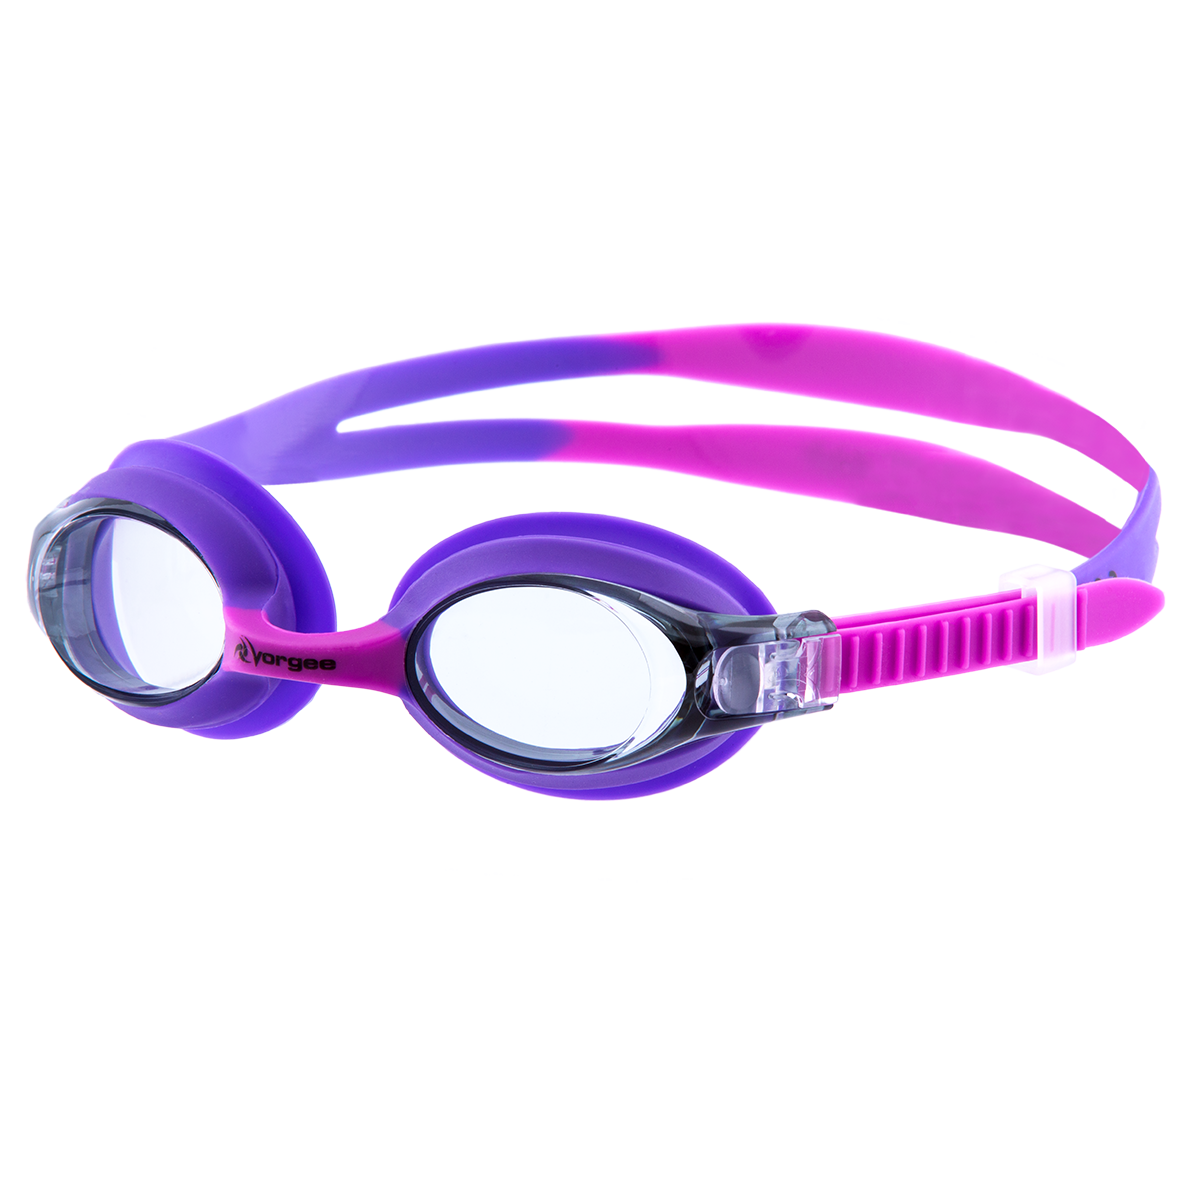 Dolphin Goggles Junior Clear Lens